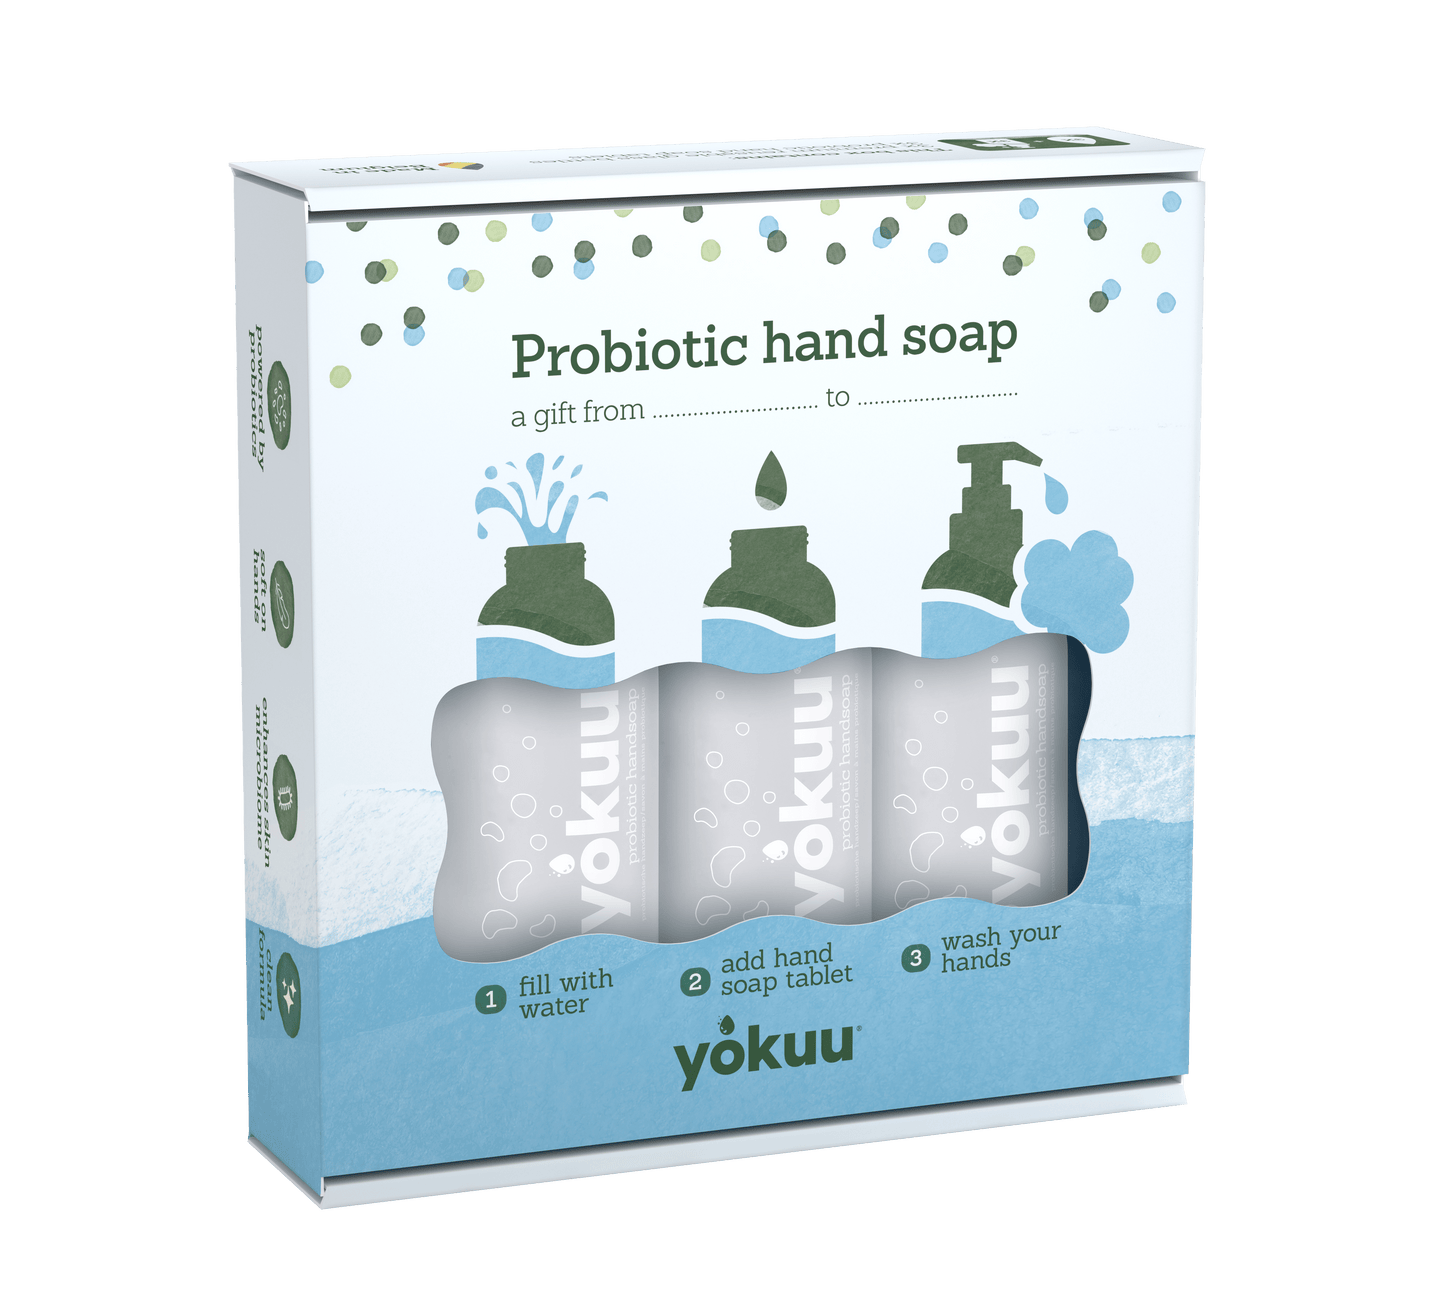 YOKUU Hand Soap Gifting Box